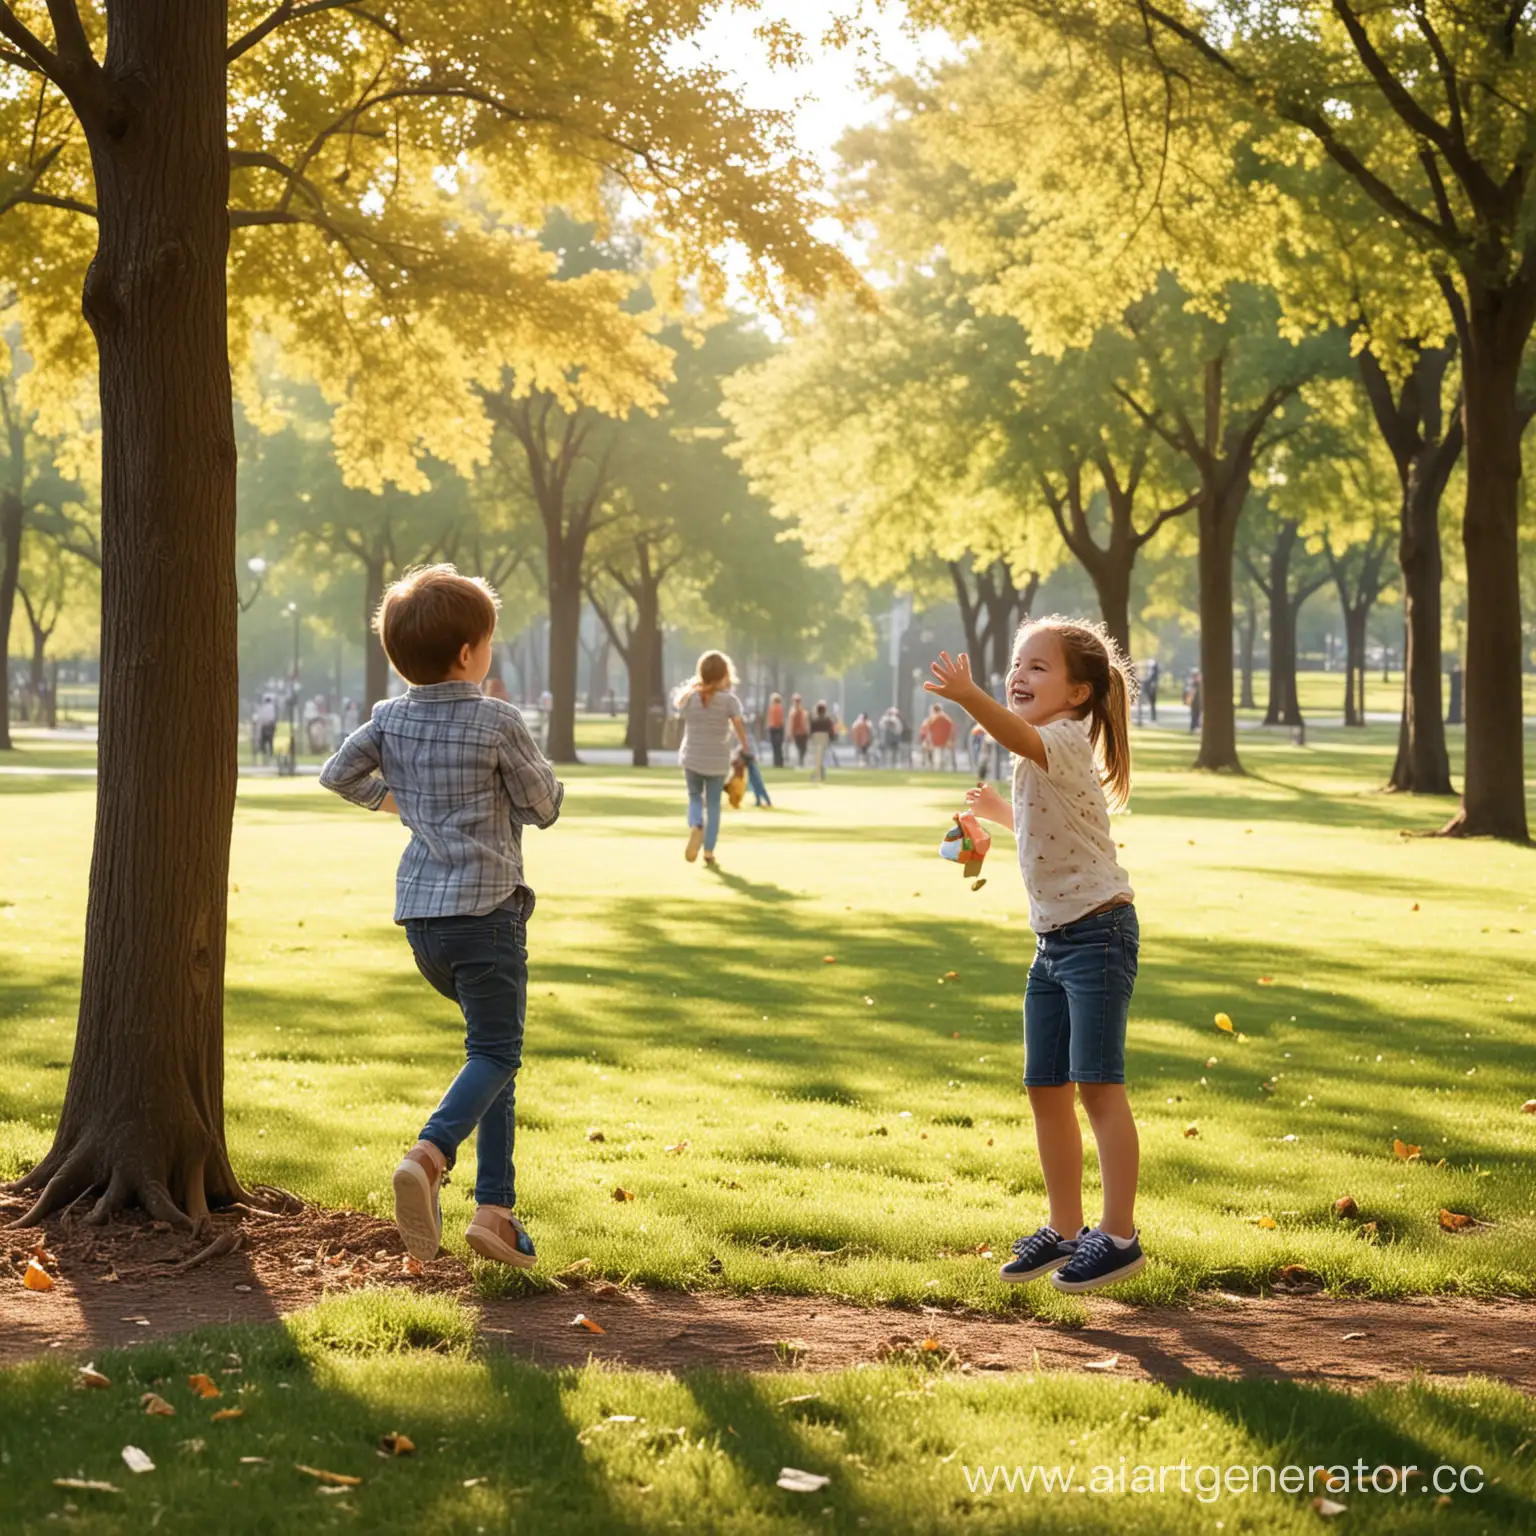 Joyful-Children-Playing-in-the-Park-Amid-Natures-Splendor